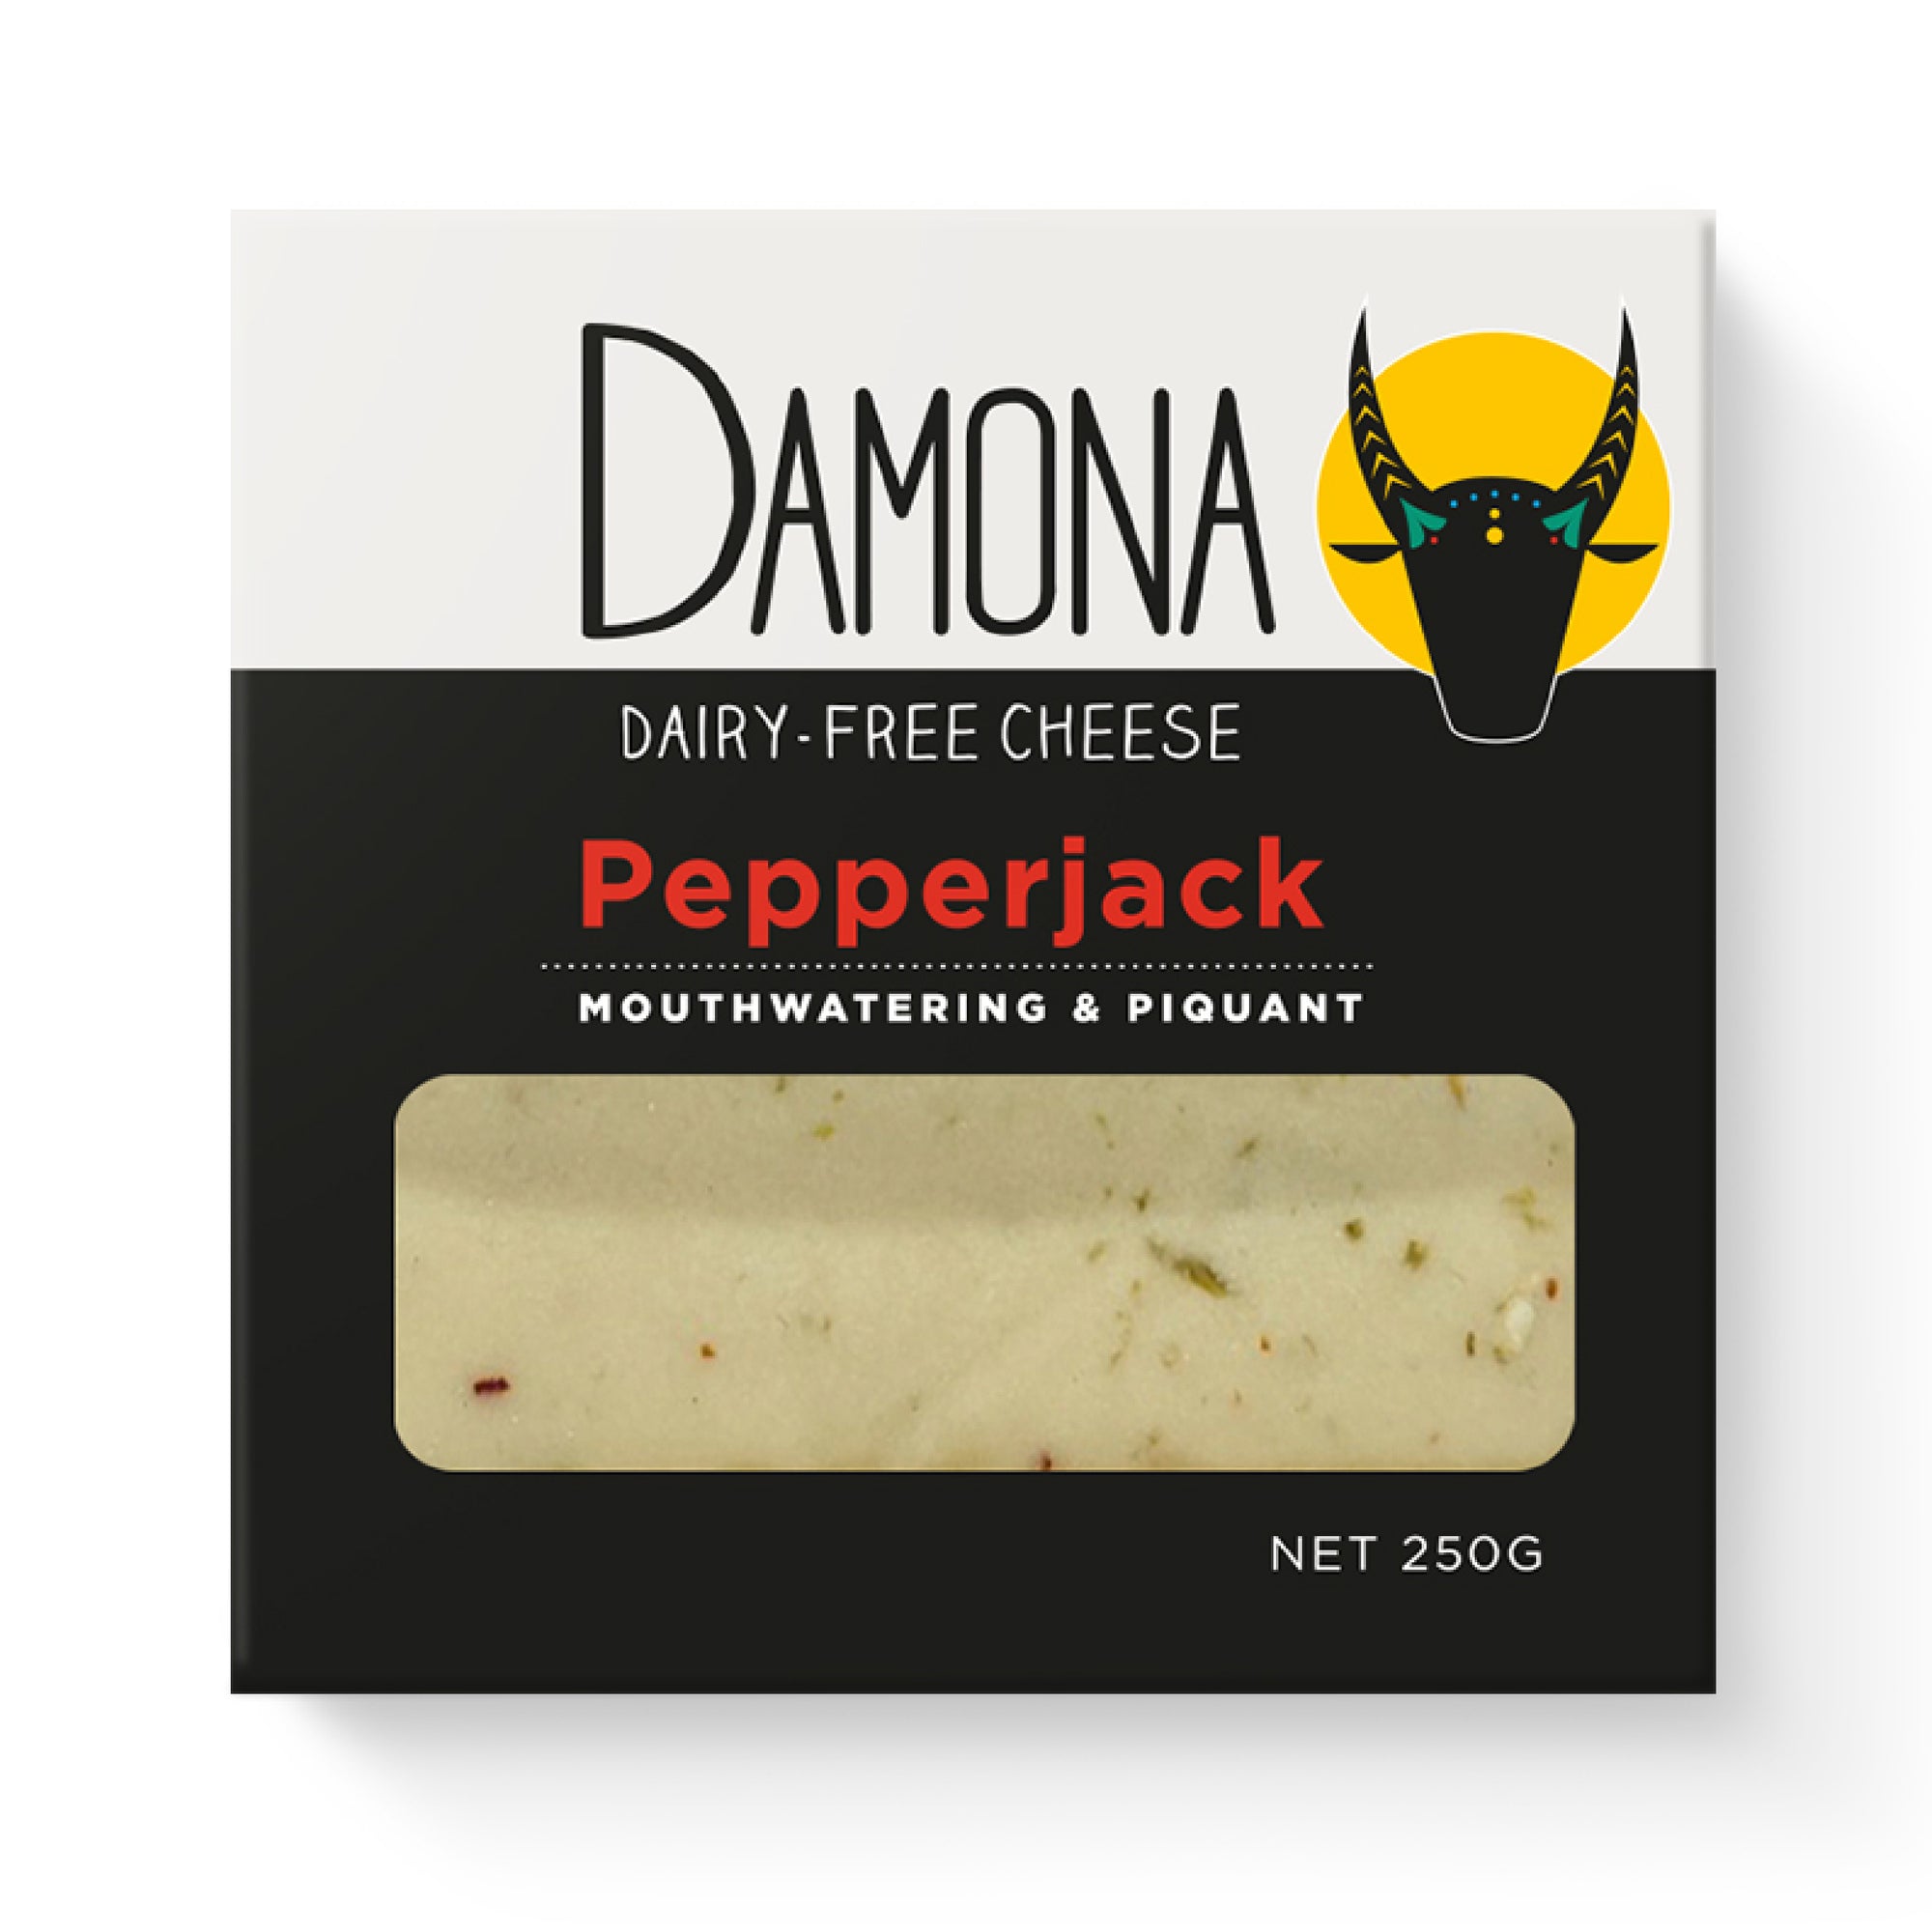 Damona Divine Cow Pepperjack Cheese